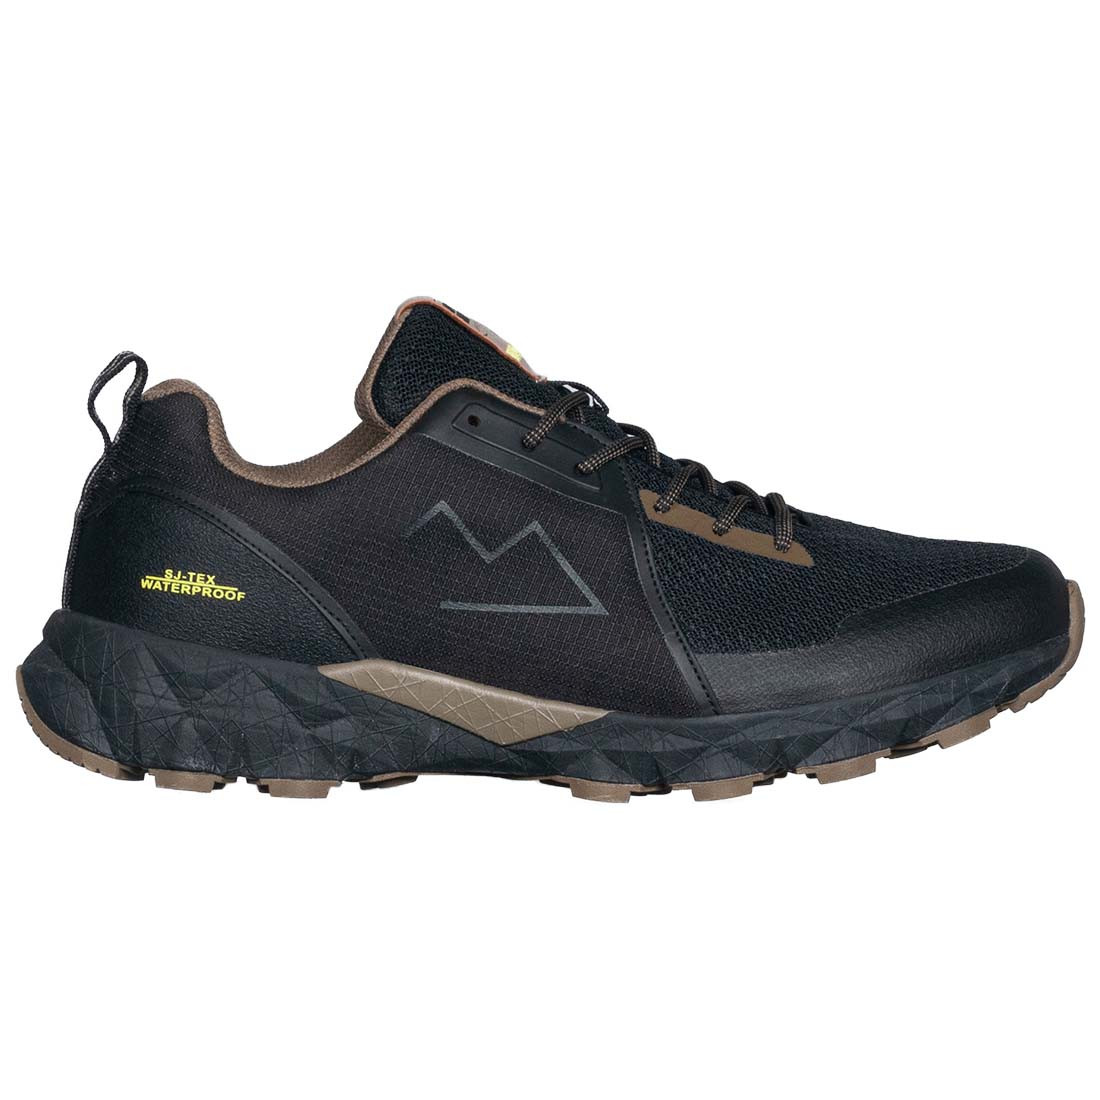 TAMAN sneakers outdoor versatili e impermeabili - Calzature di protezione